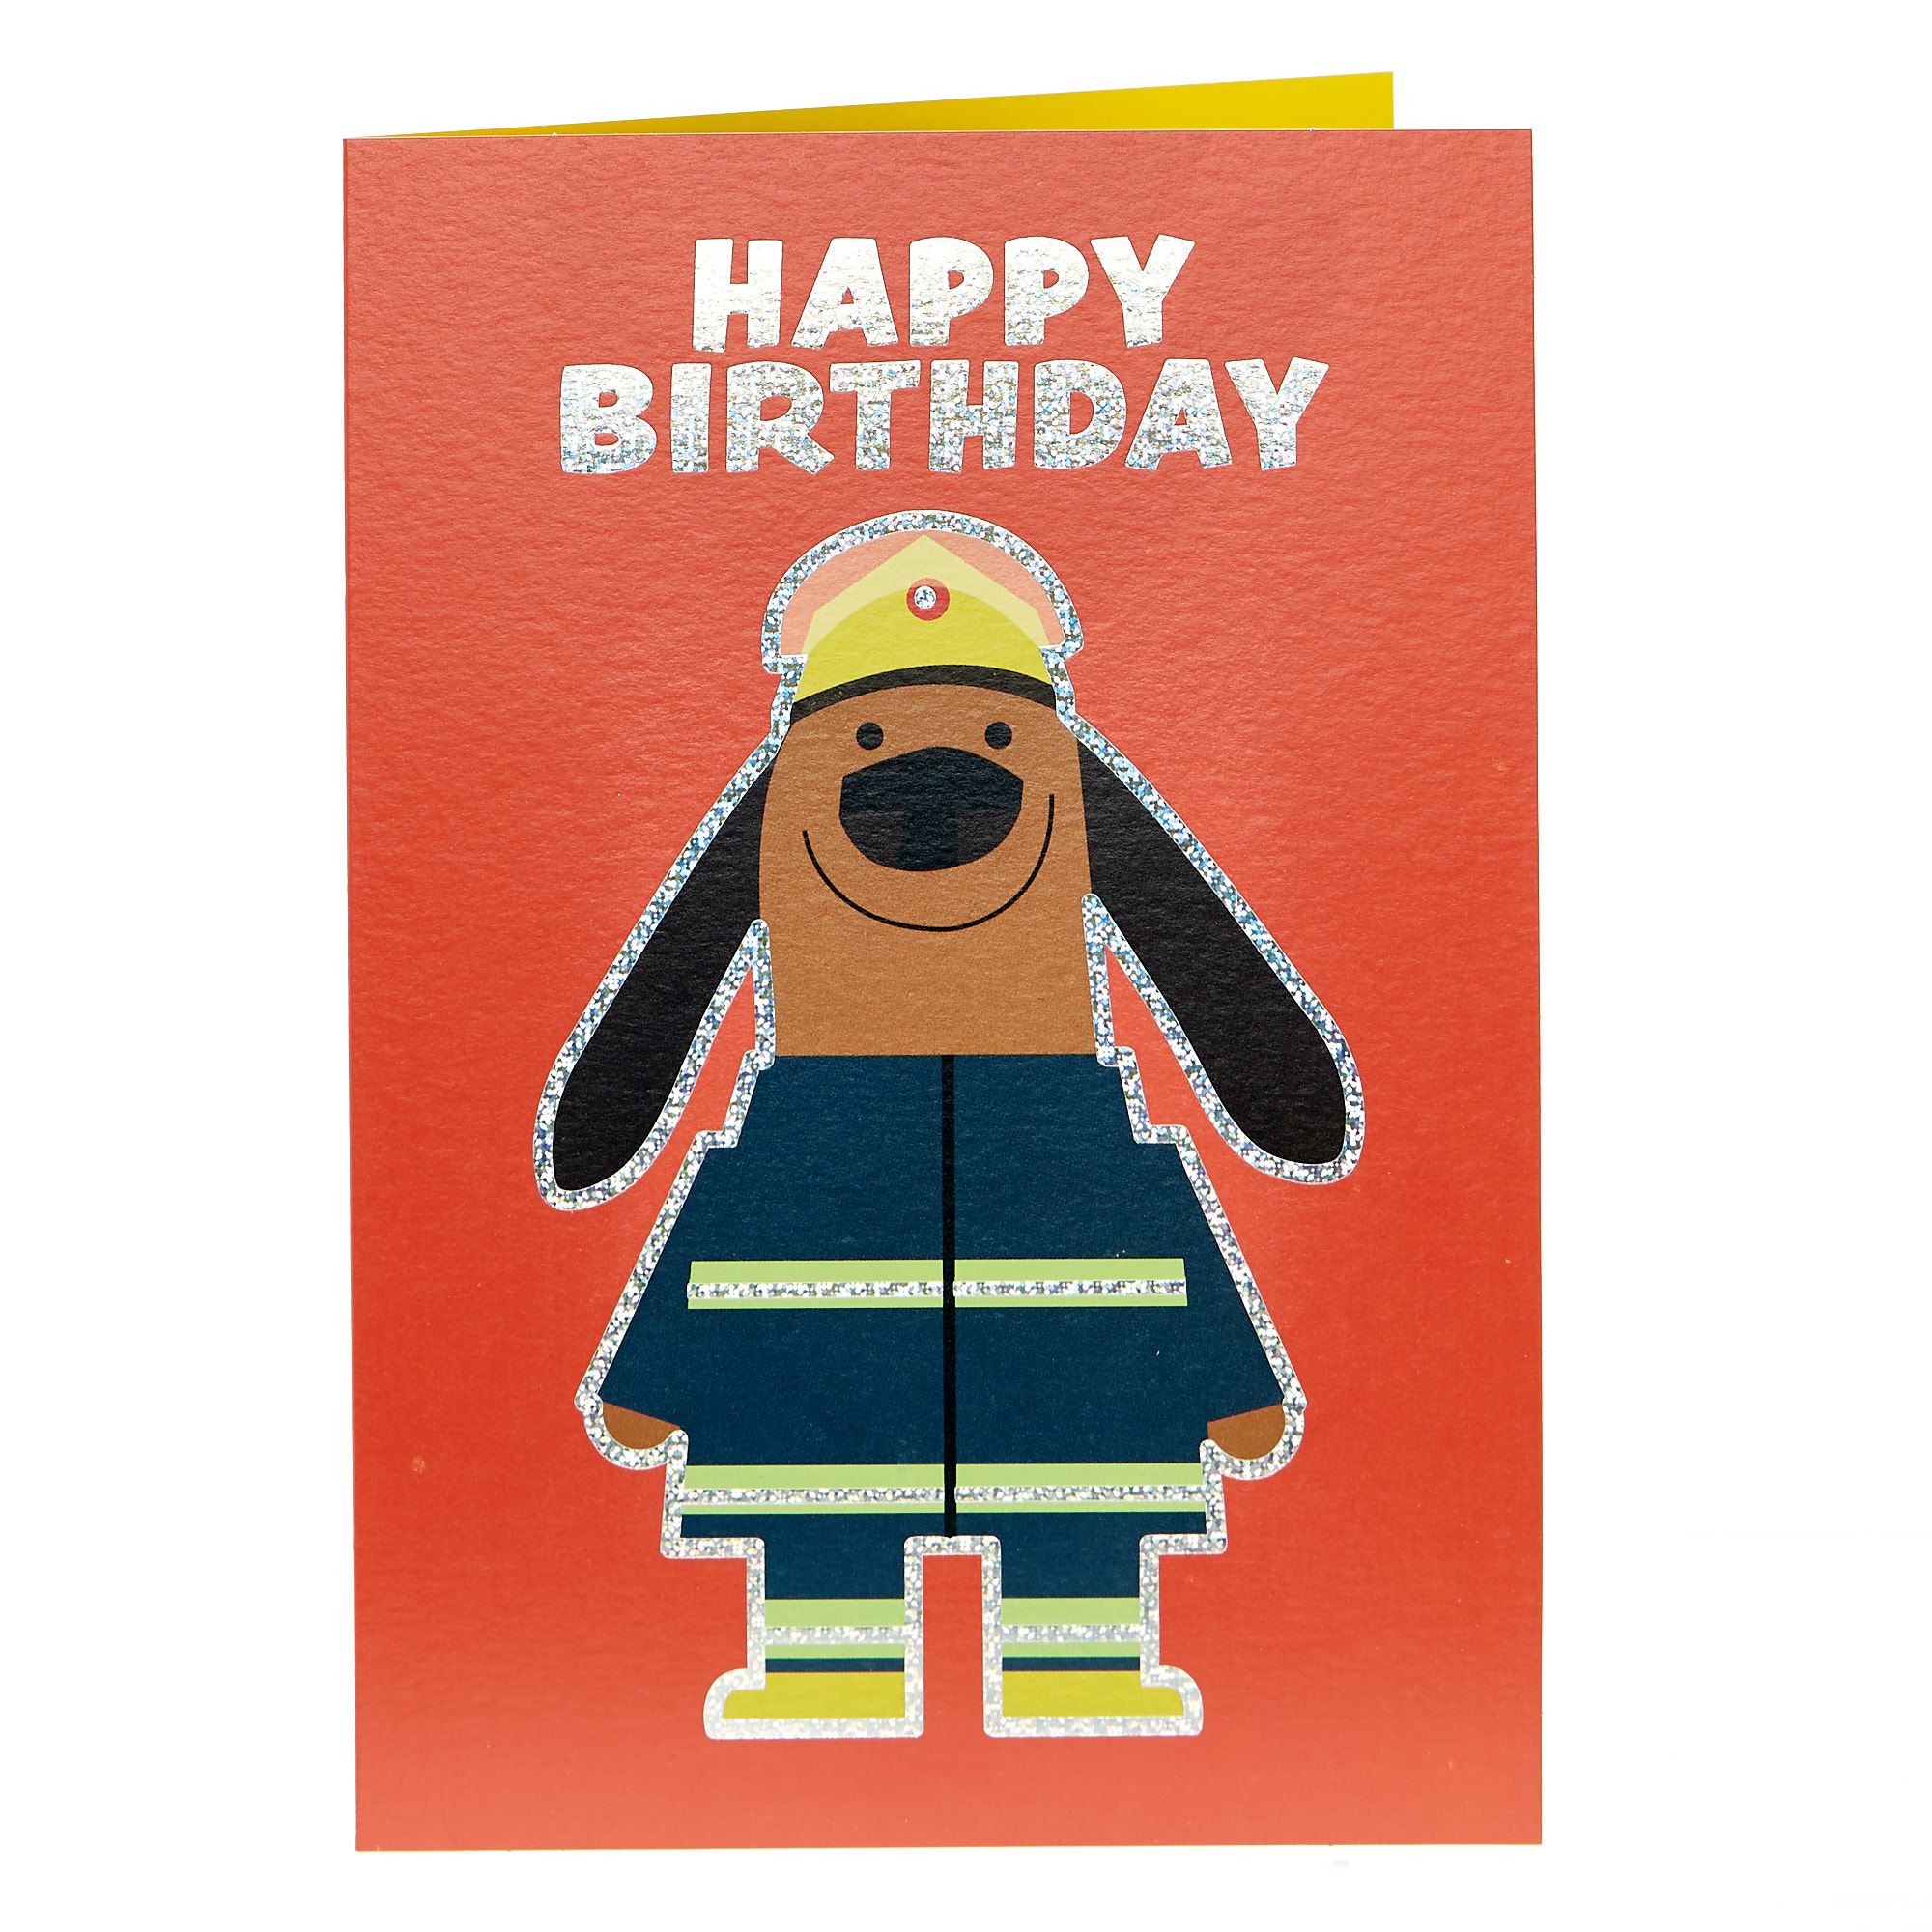 City Heroes Birthday Card - Dog Firefighter